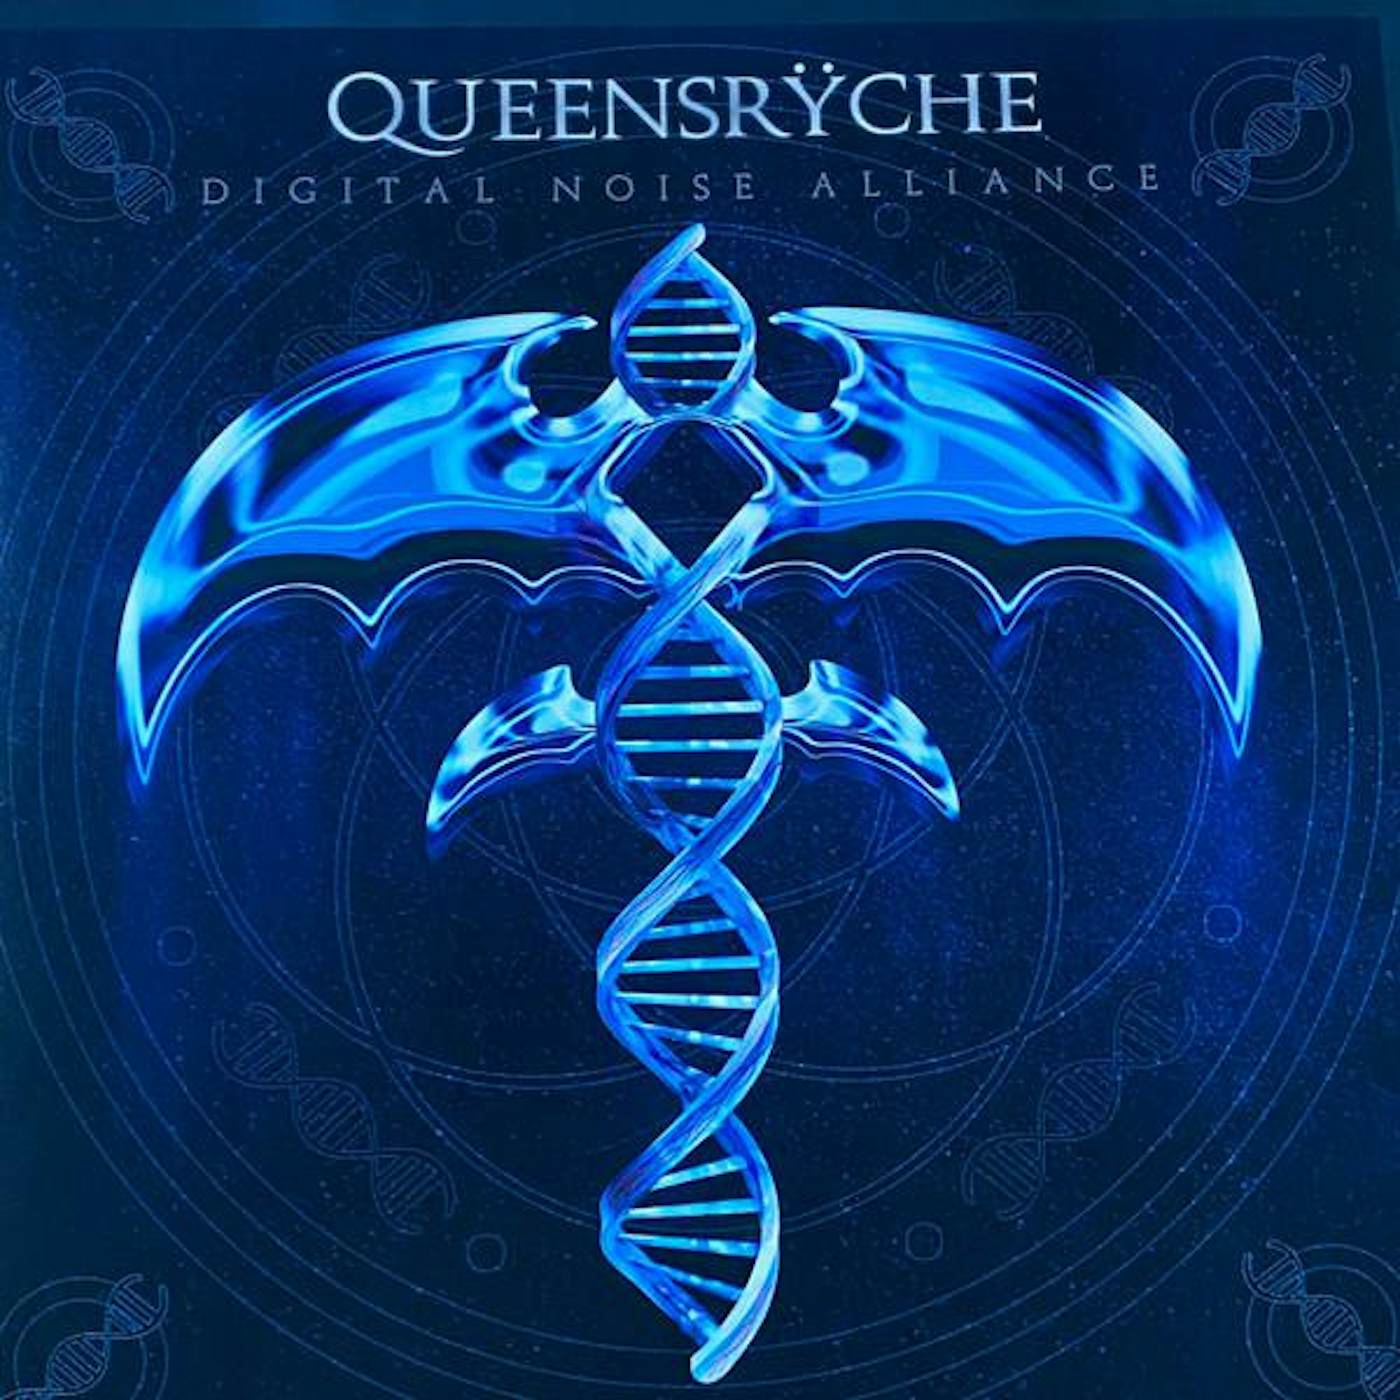 Queensrÿche Digital Noise Alliance Vinyl Record